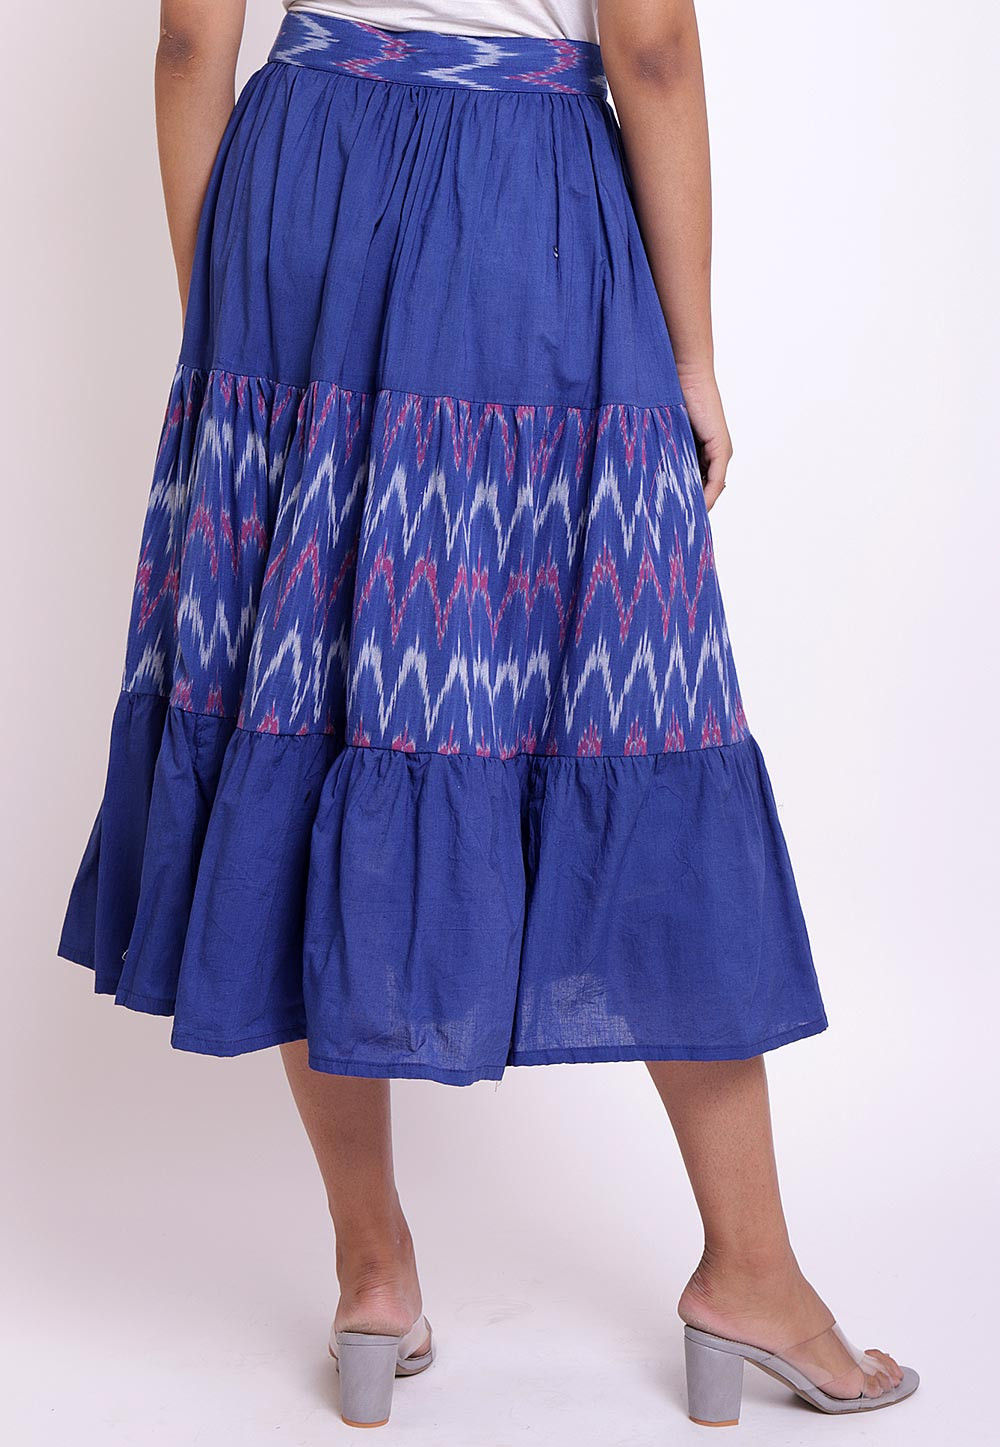 Ikat woven Cotton Front Open Skirt in Blue : BNJ586